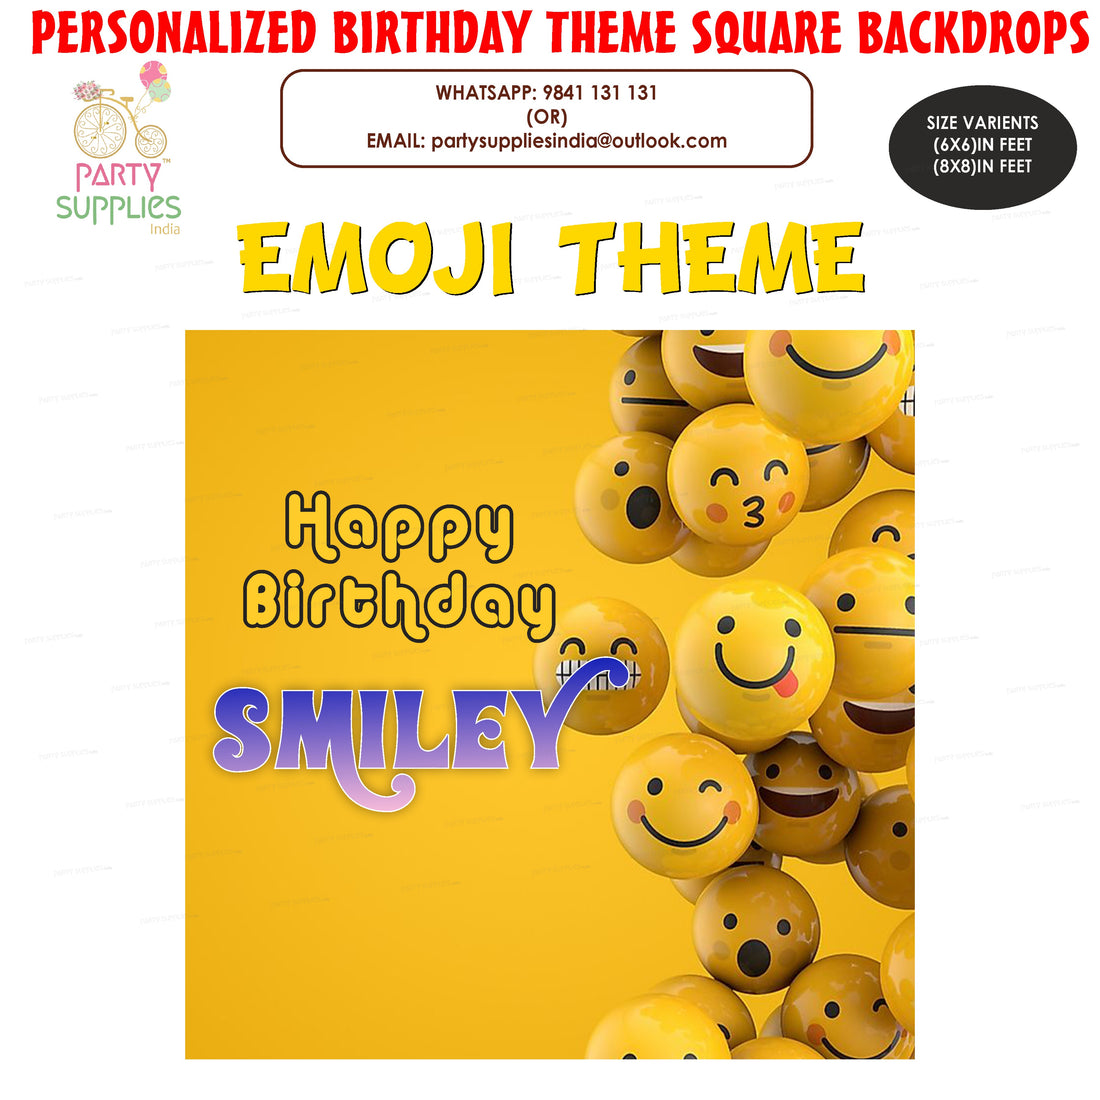 PSI Emoji Theme Customized Square Backdrop